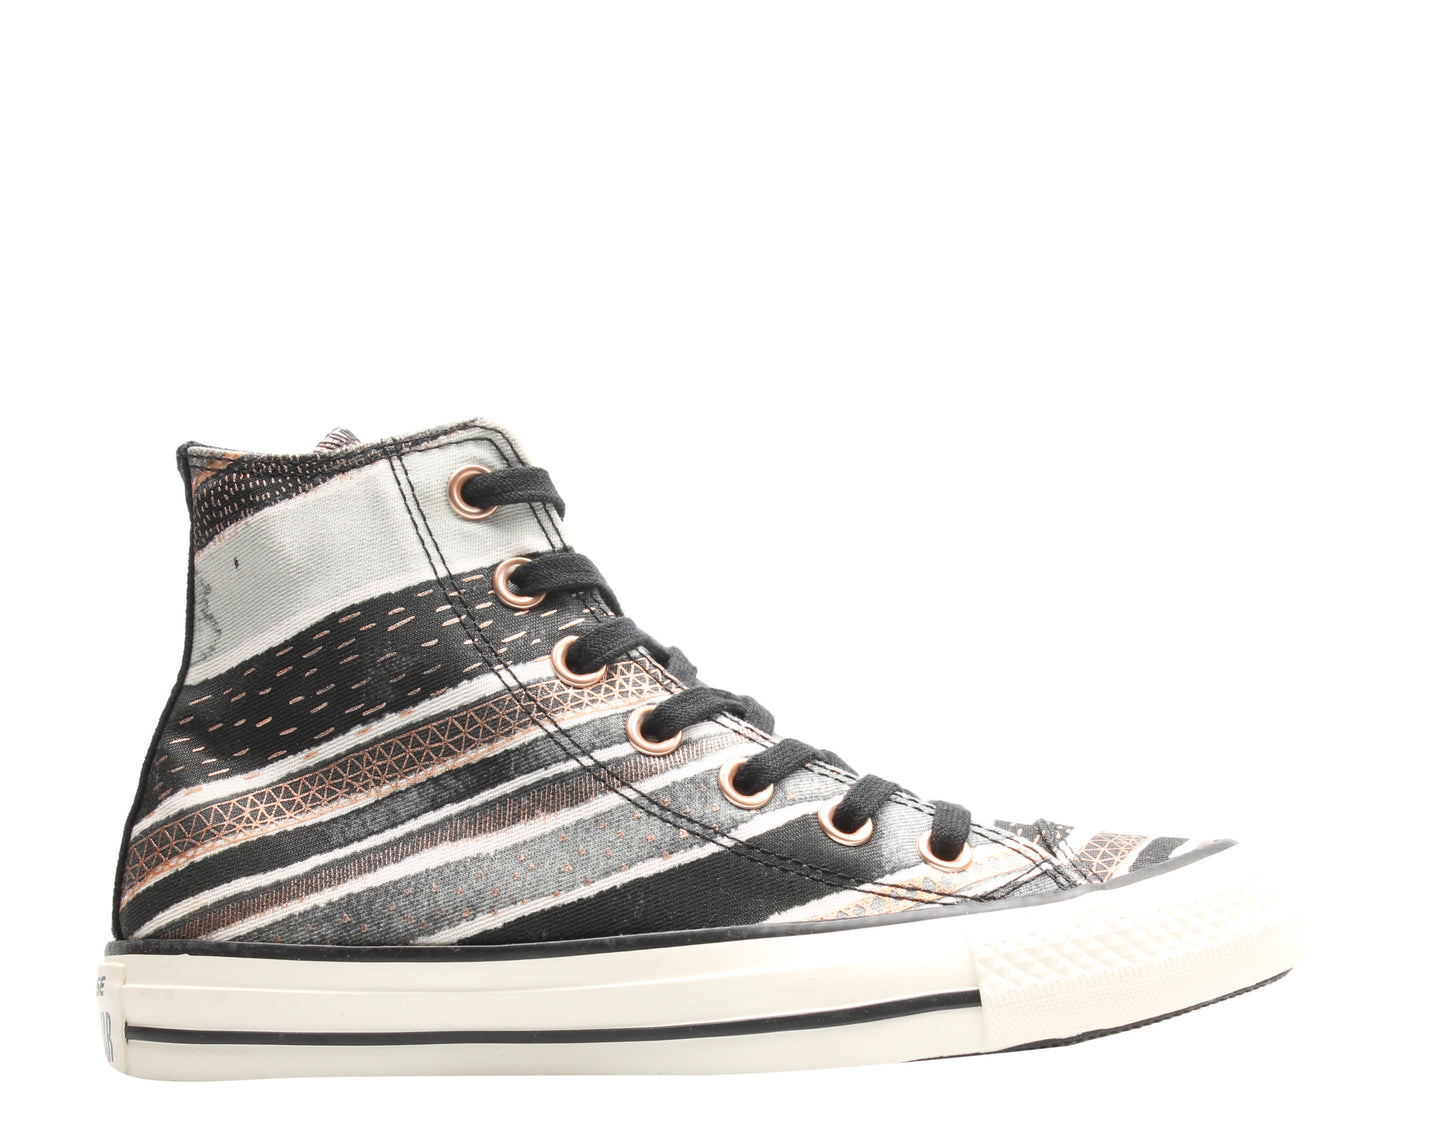 Converse Chuck Taylor All Star Hi Stripe Black/Dolphin Women's Sneakers 551564C